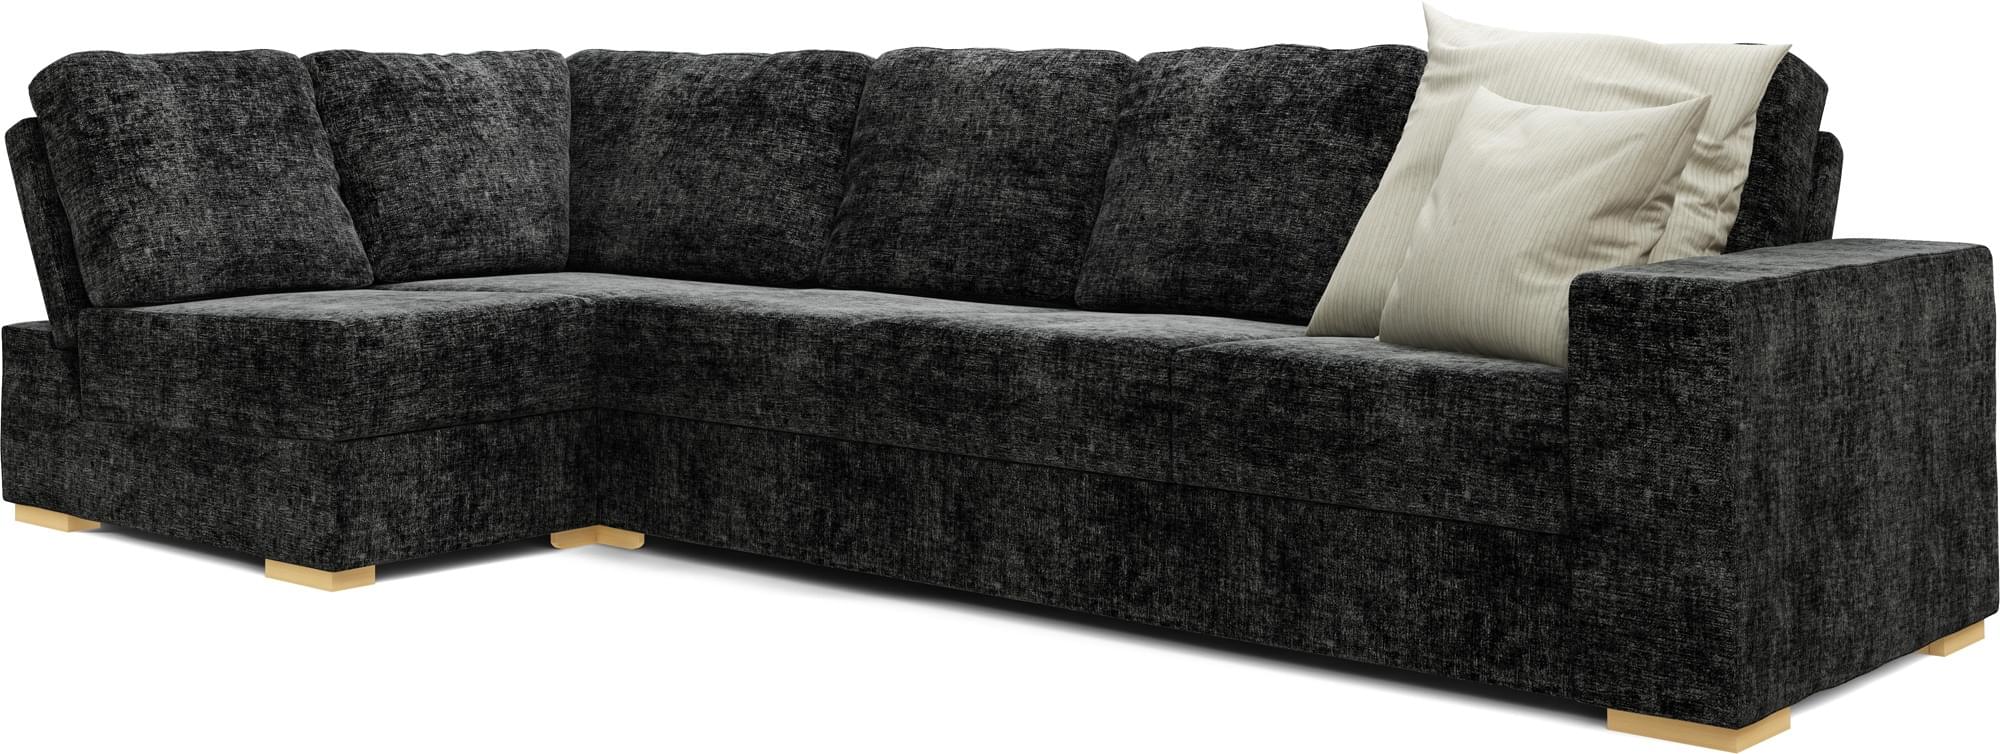 lear double corner sofa bed